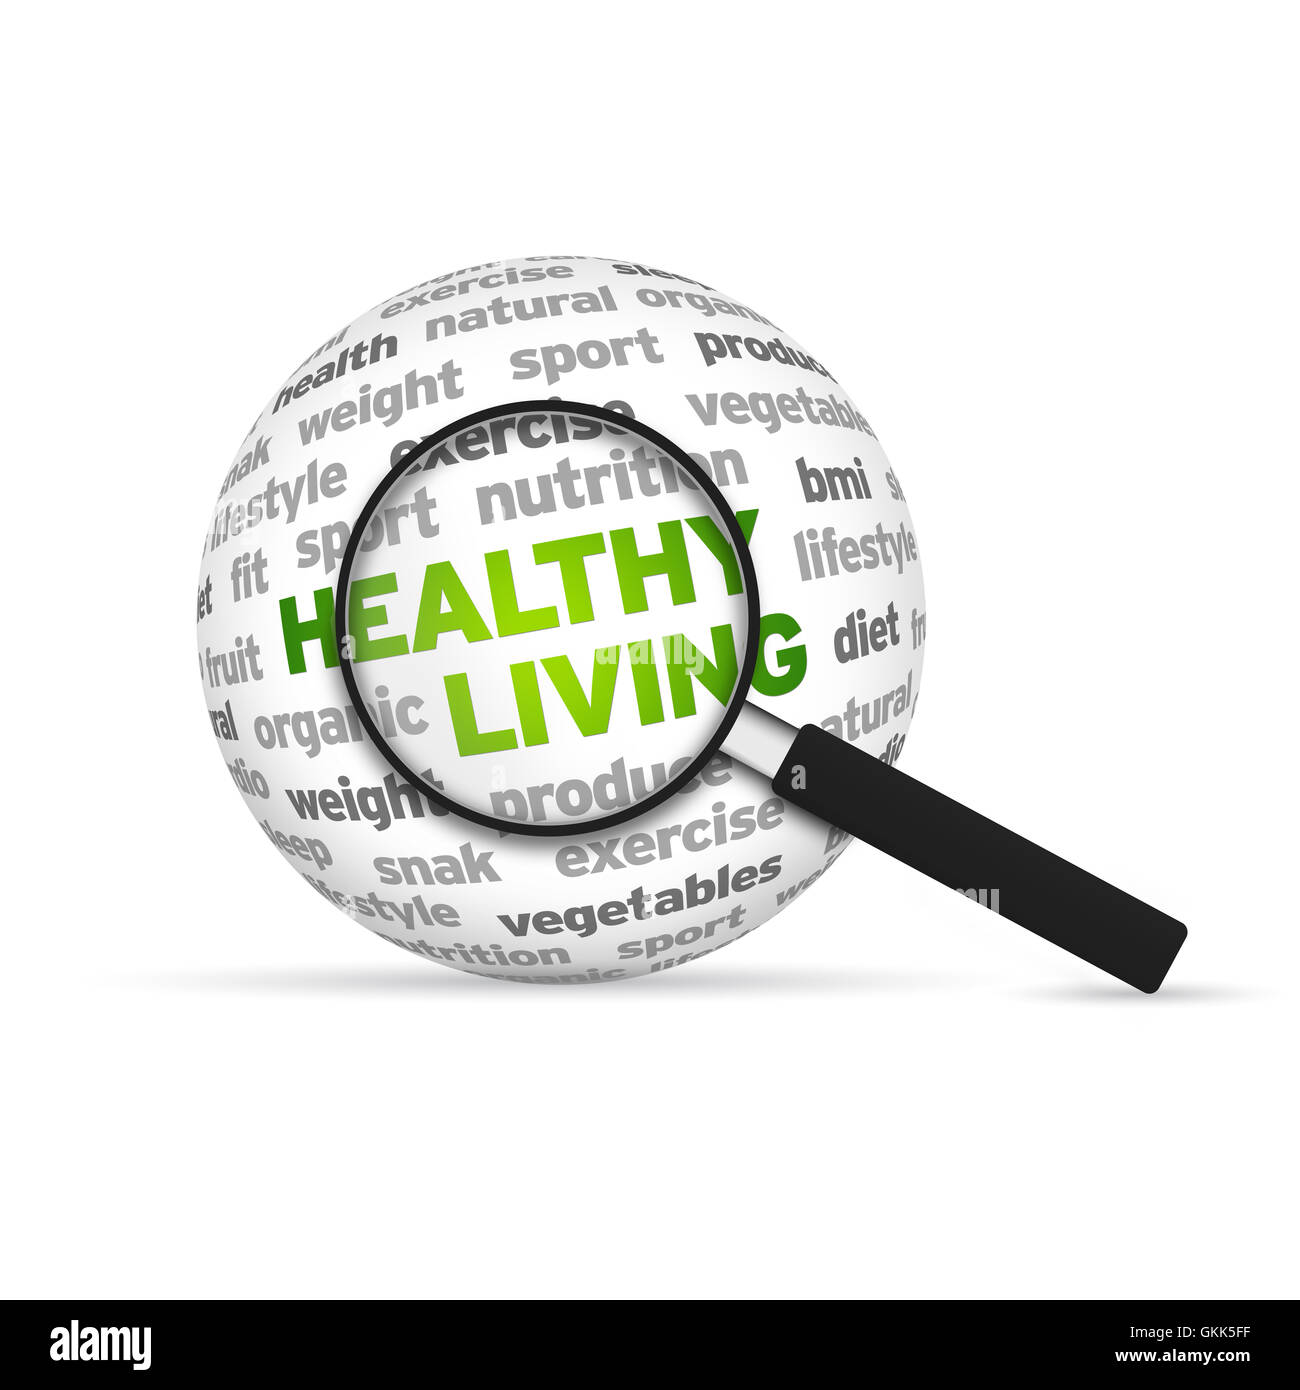 Healthy Living Stock Photo